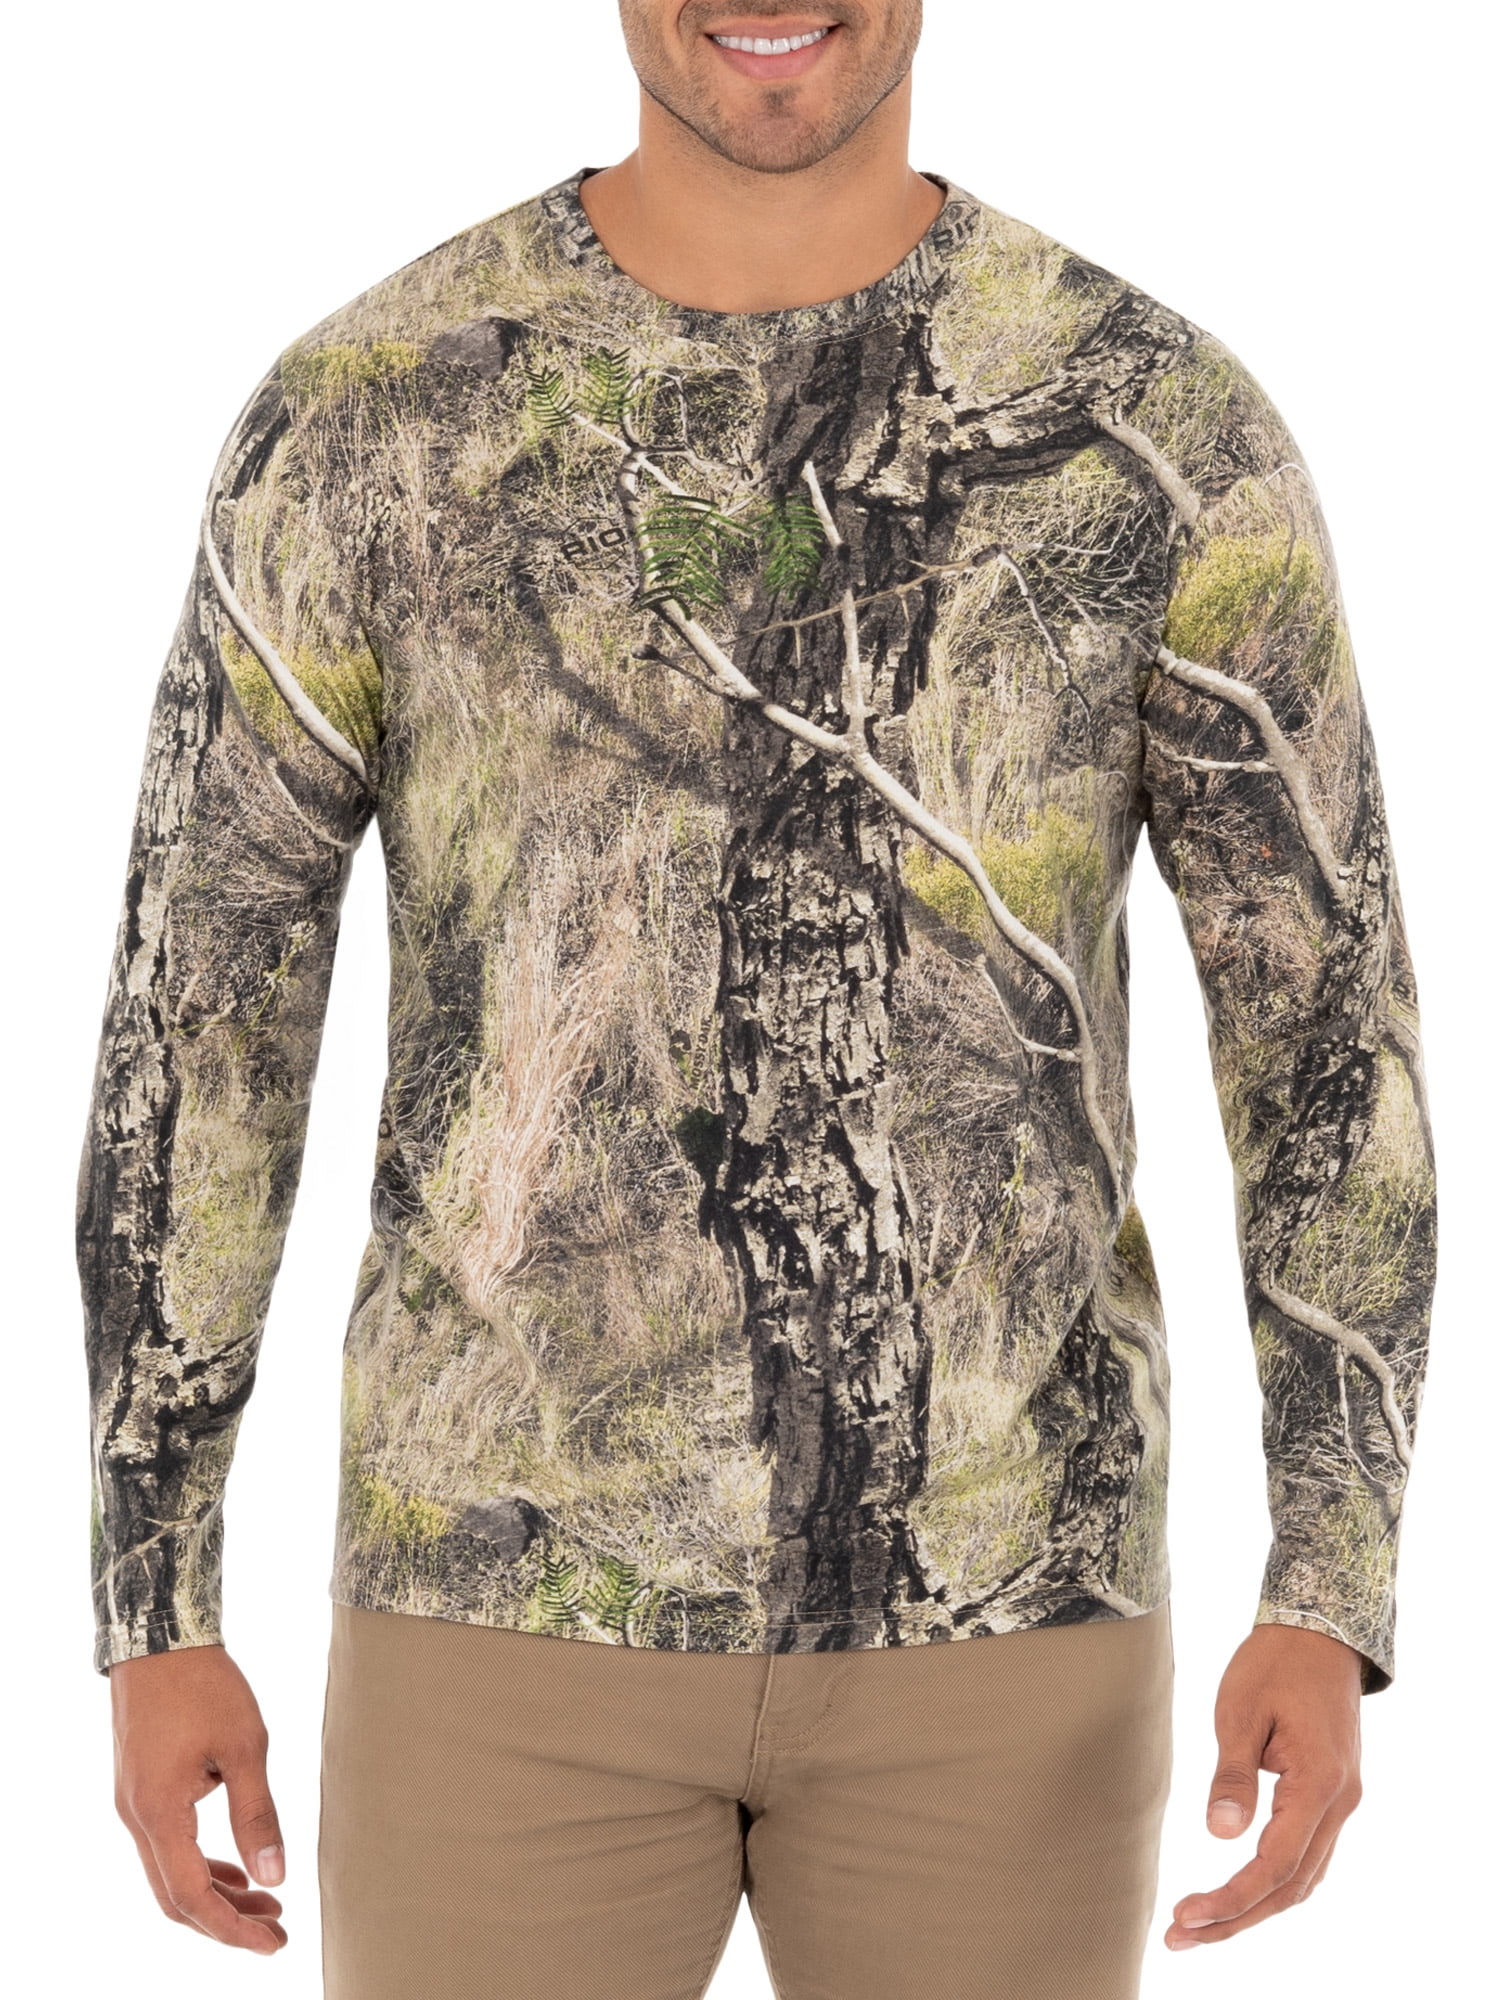 Mossy Oak Brush Men's Graphic Camo Long Sleeve Crew T-Shirt Size L 